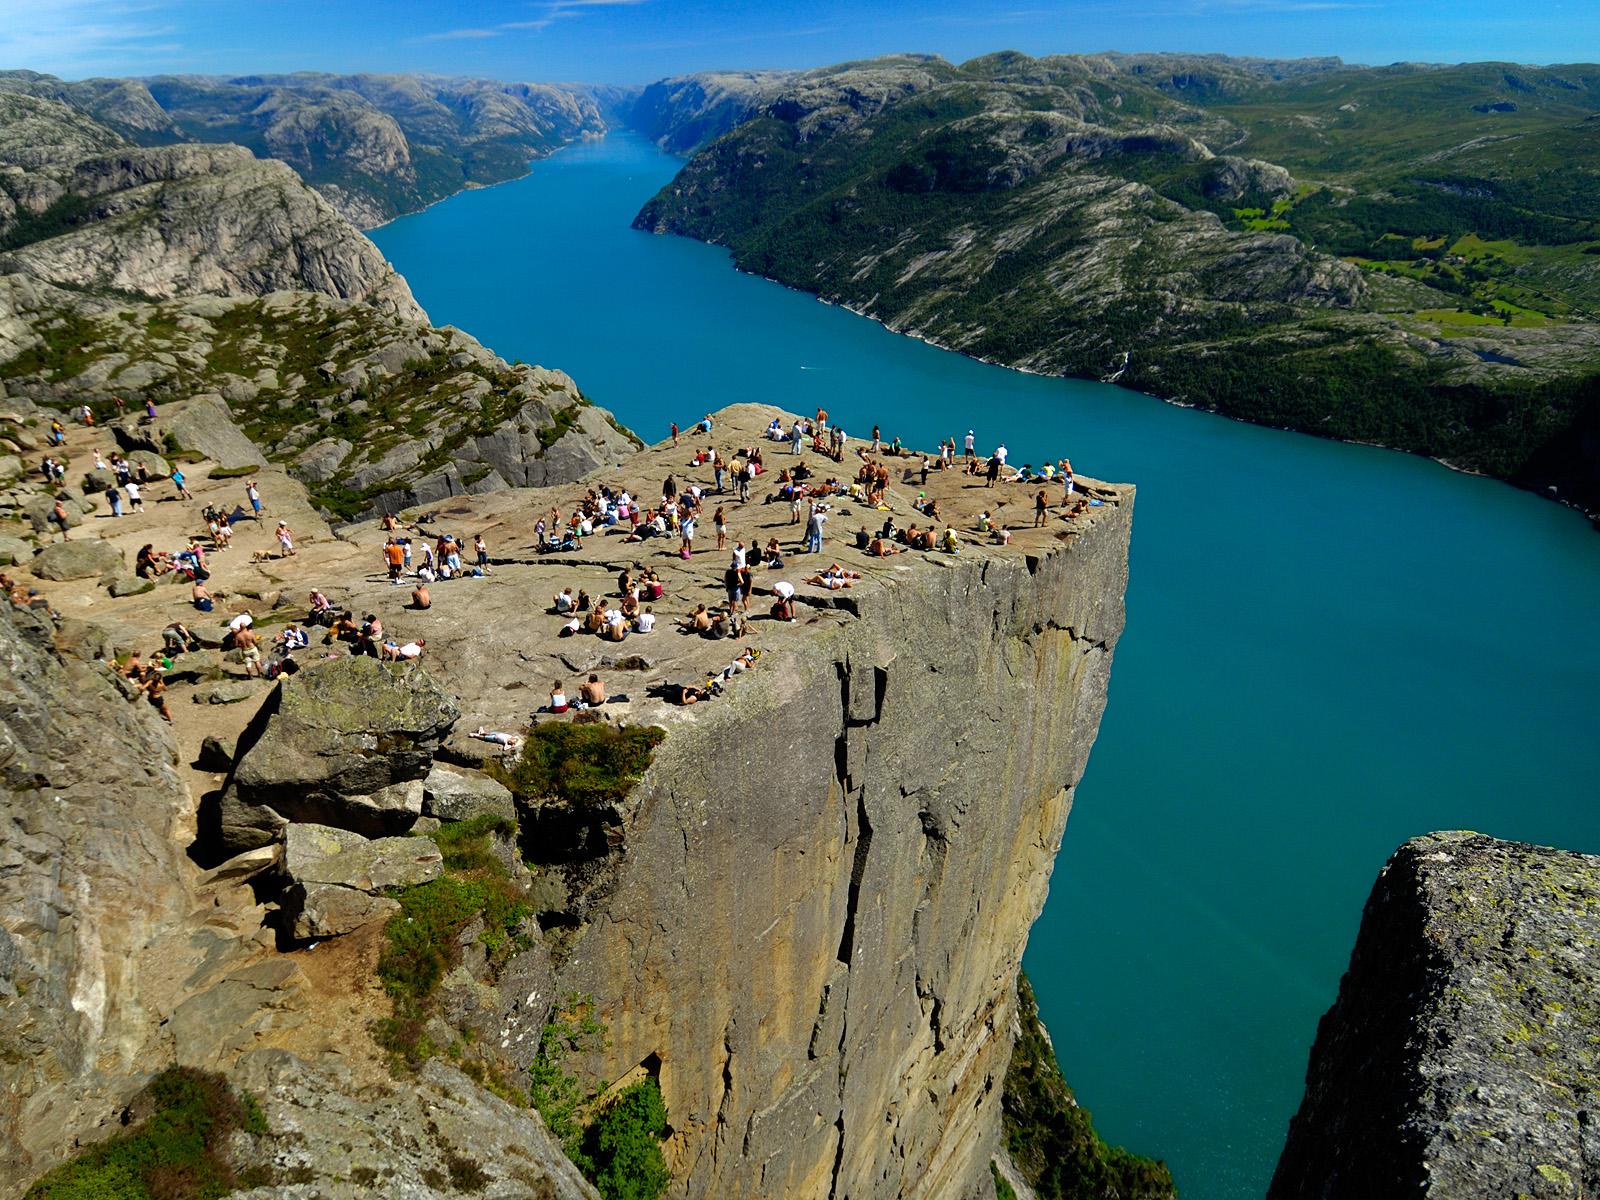 Preikestolen - the Pulpit Rock, perched 2000 feet over a fjord